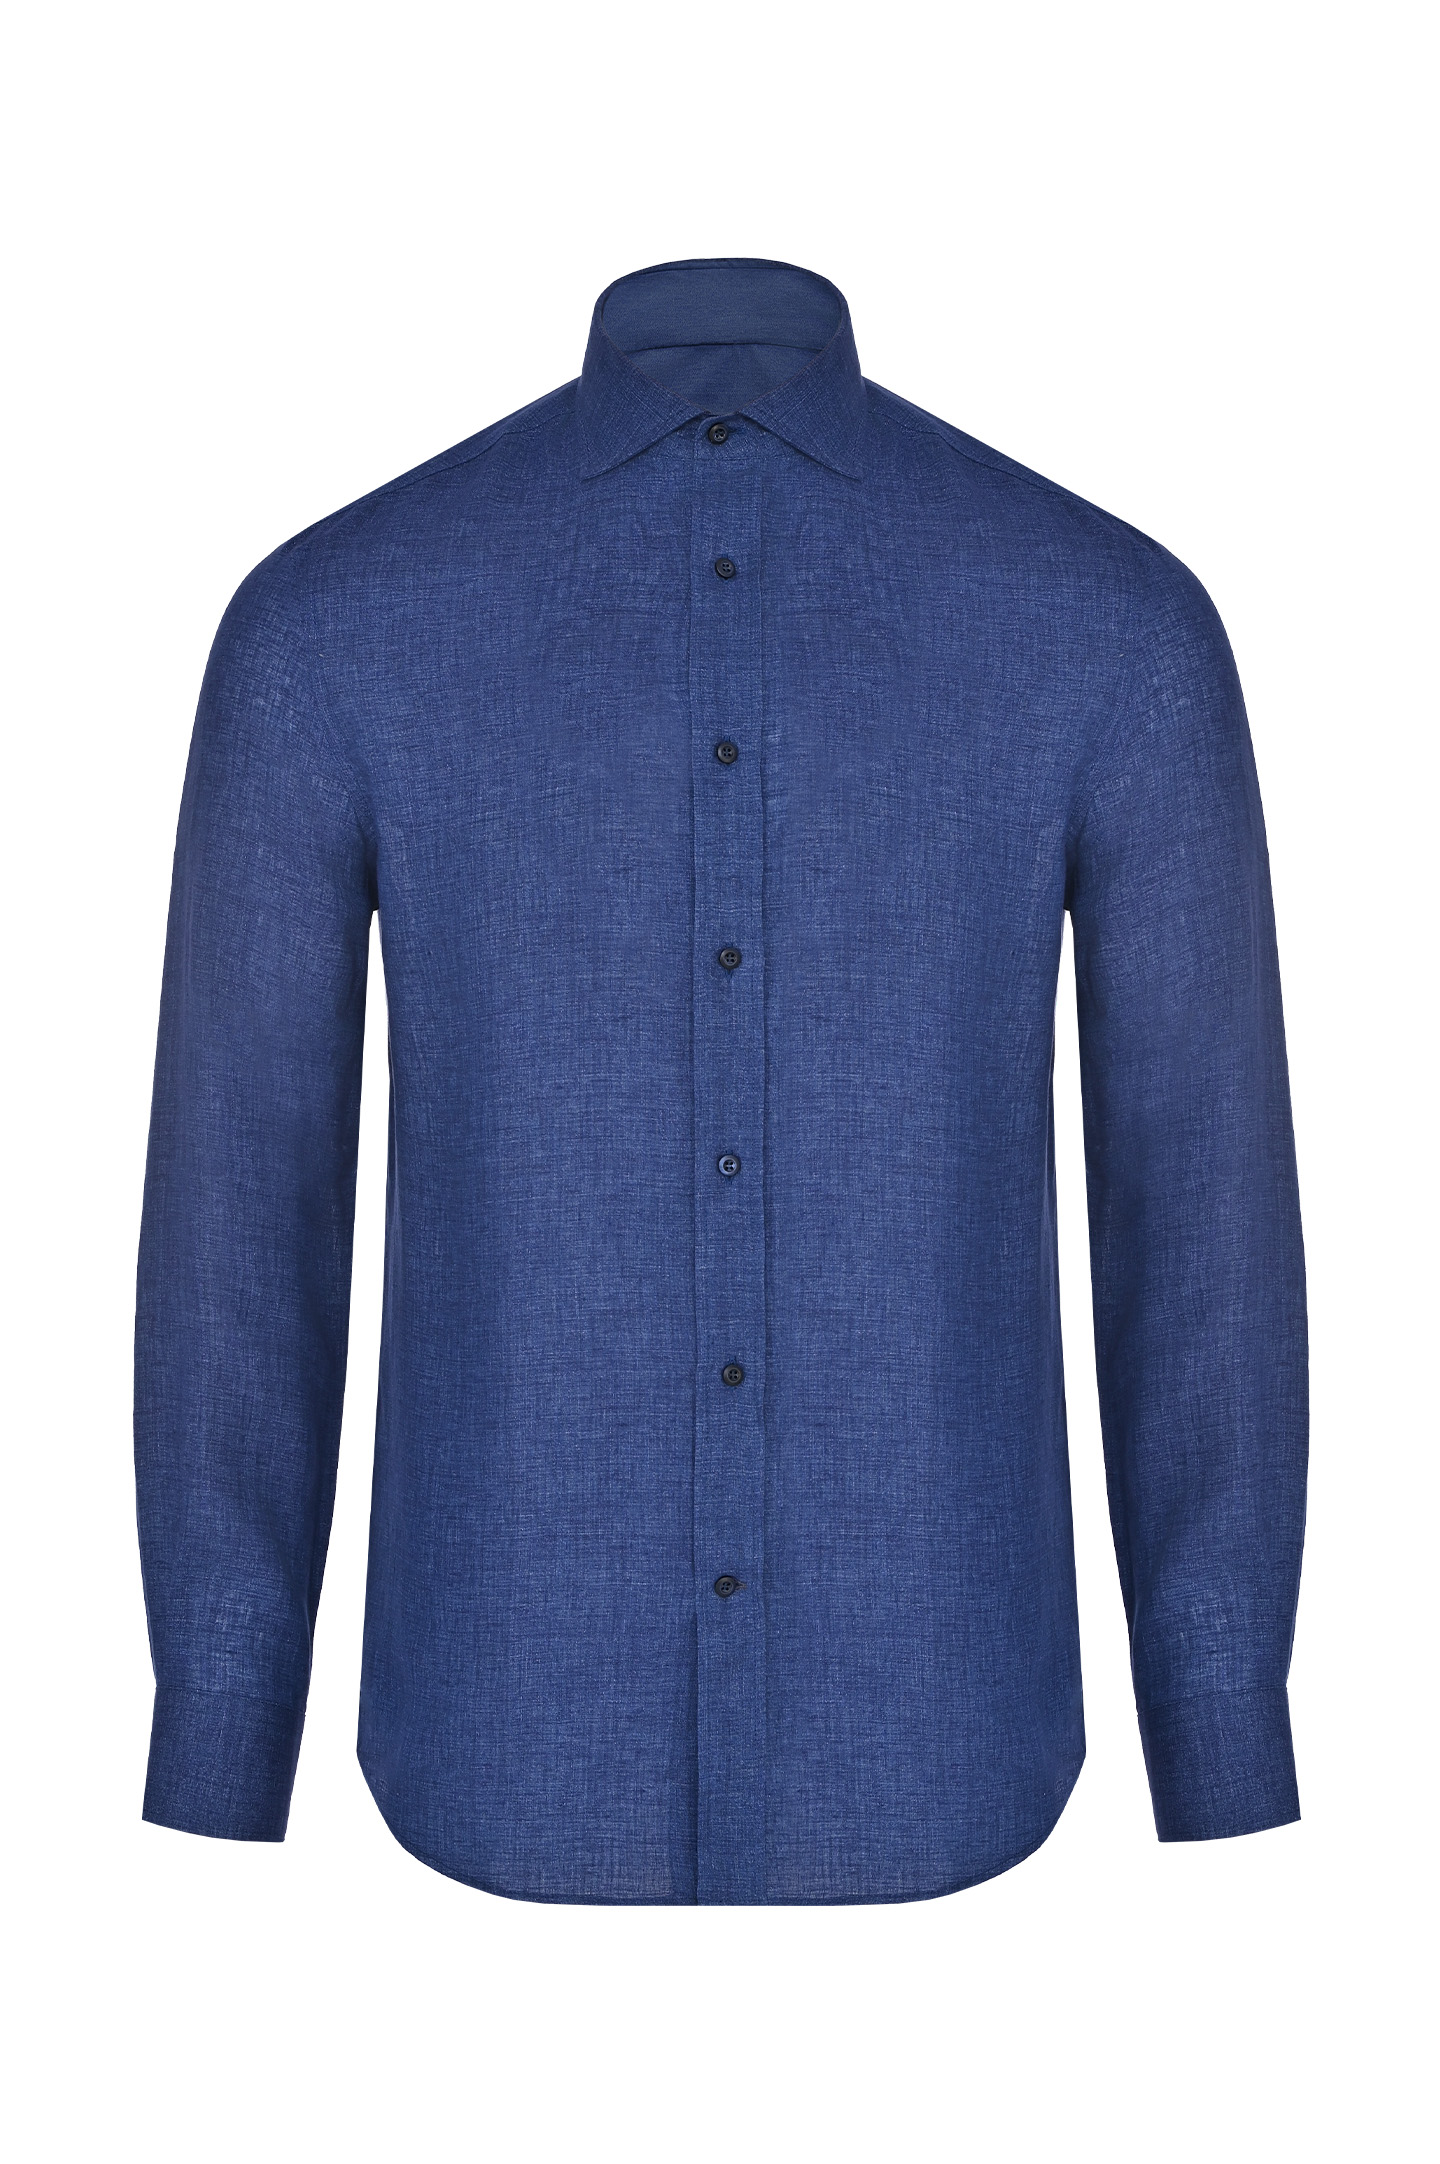 Рубашка BRUNELLO  CUCINELLI MB6500627, цвет: Темно-синий, Мужской